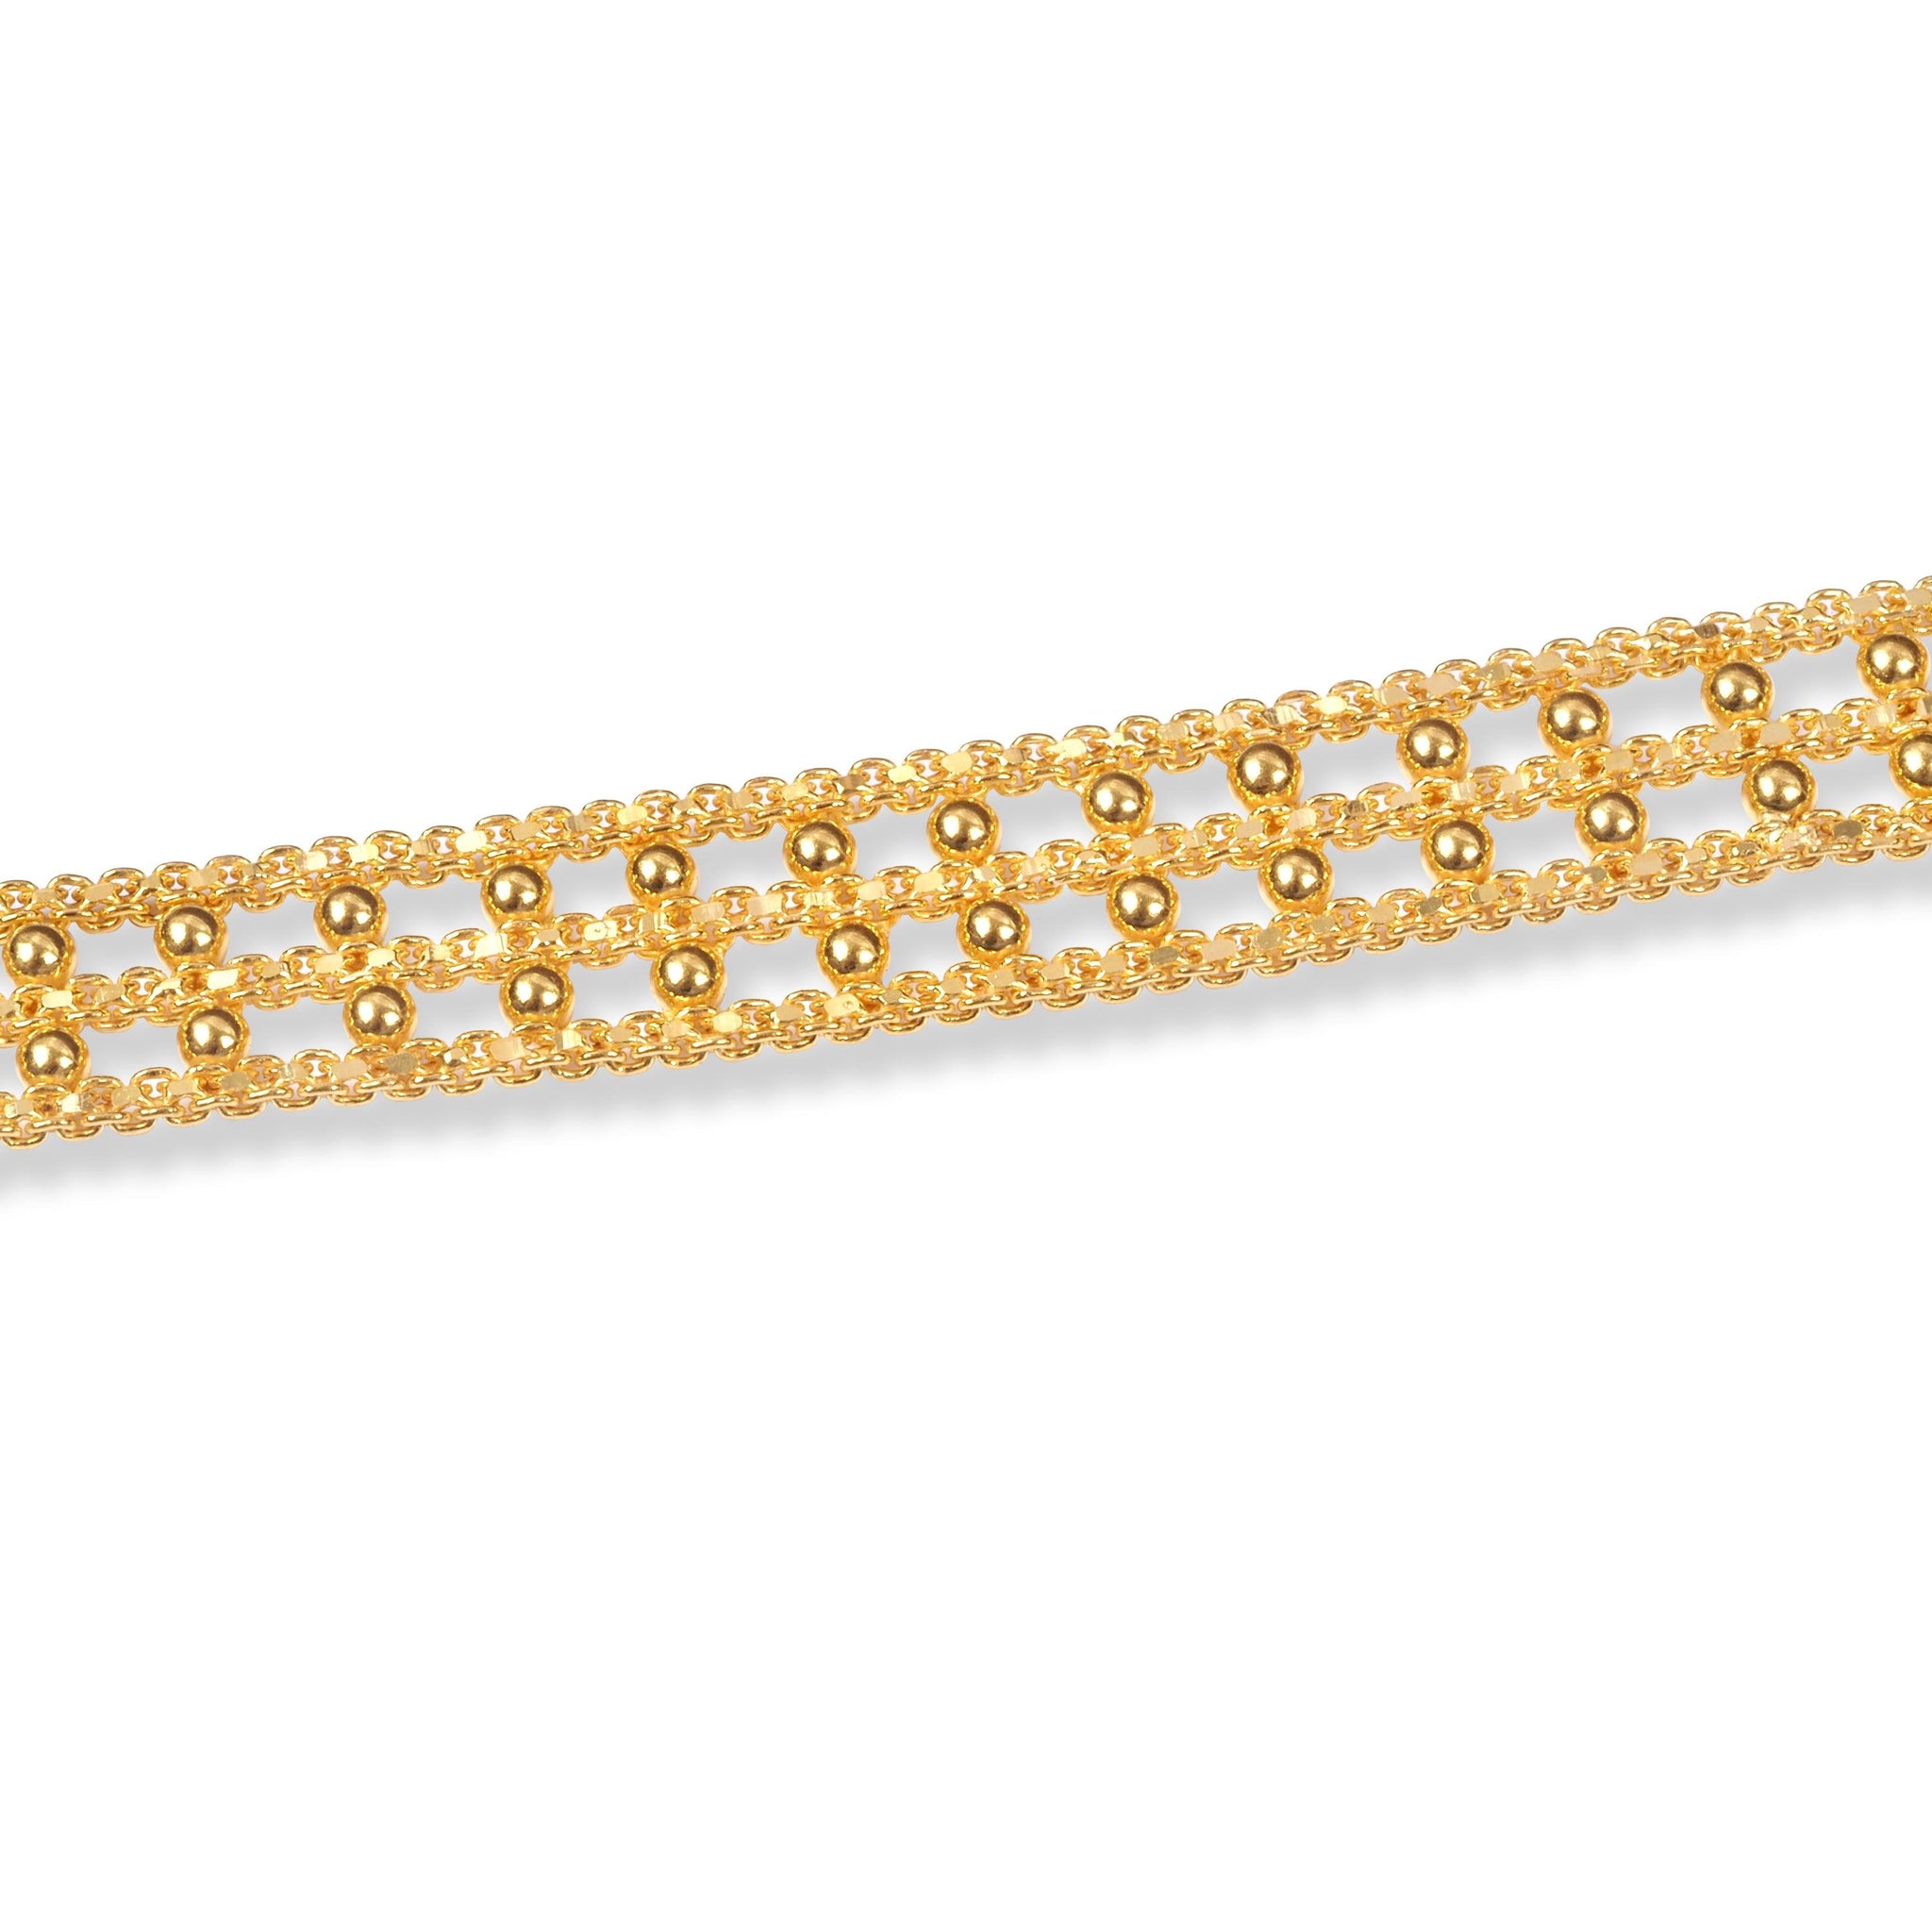 22ct Gold Ladies Bracelet in Three Row Design with U Hook Clasp LBR-7149